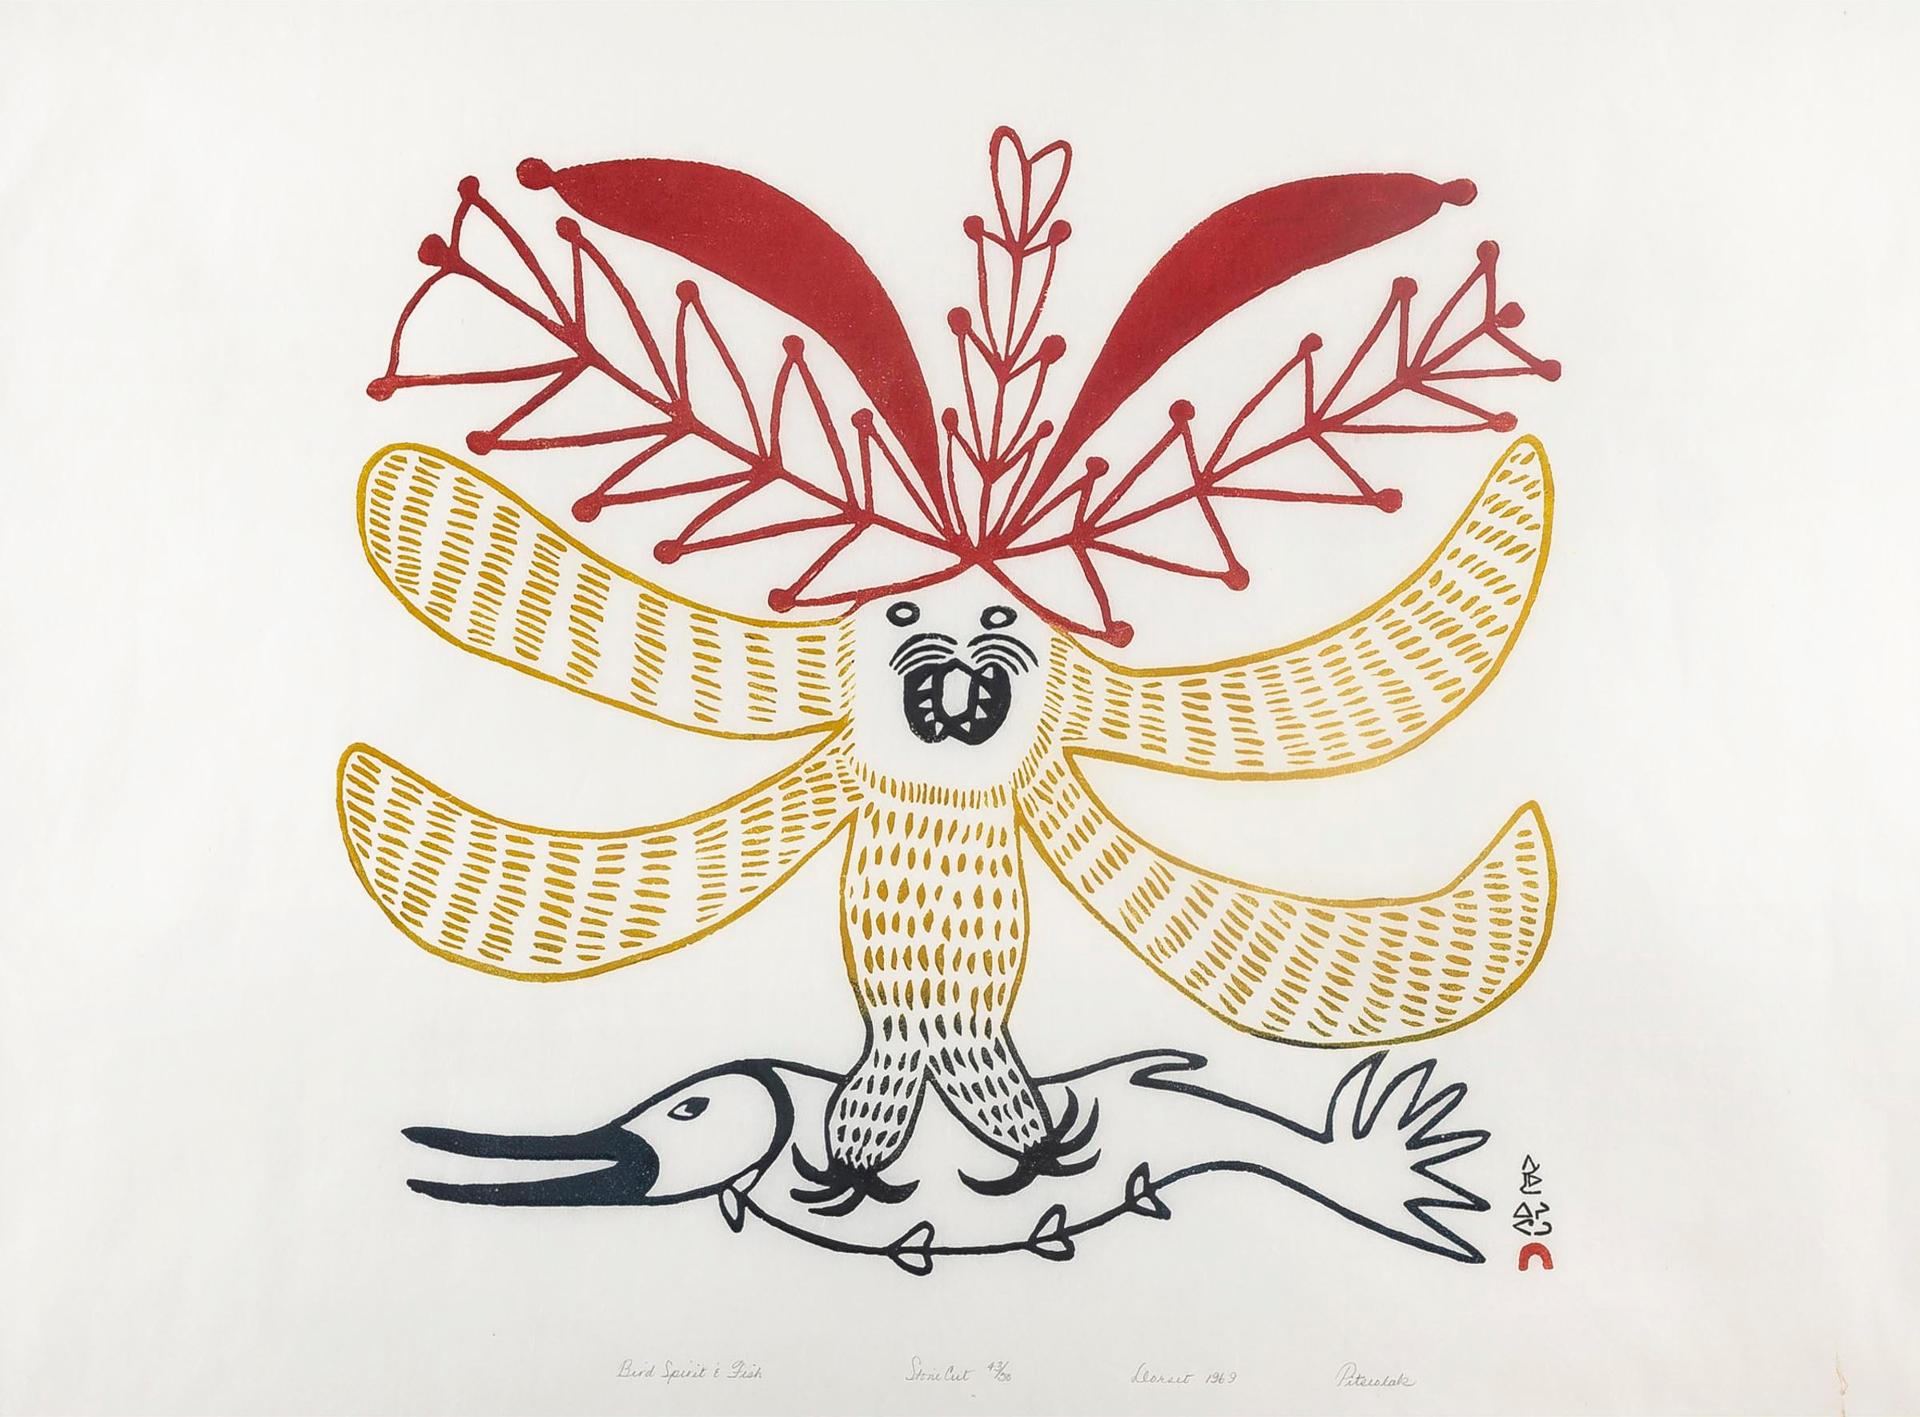 Pitseolak Ashoona (1904-1983) - Bird Spirit & Fish, 1969